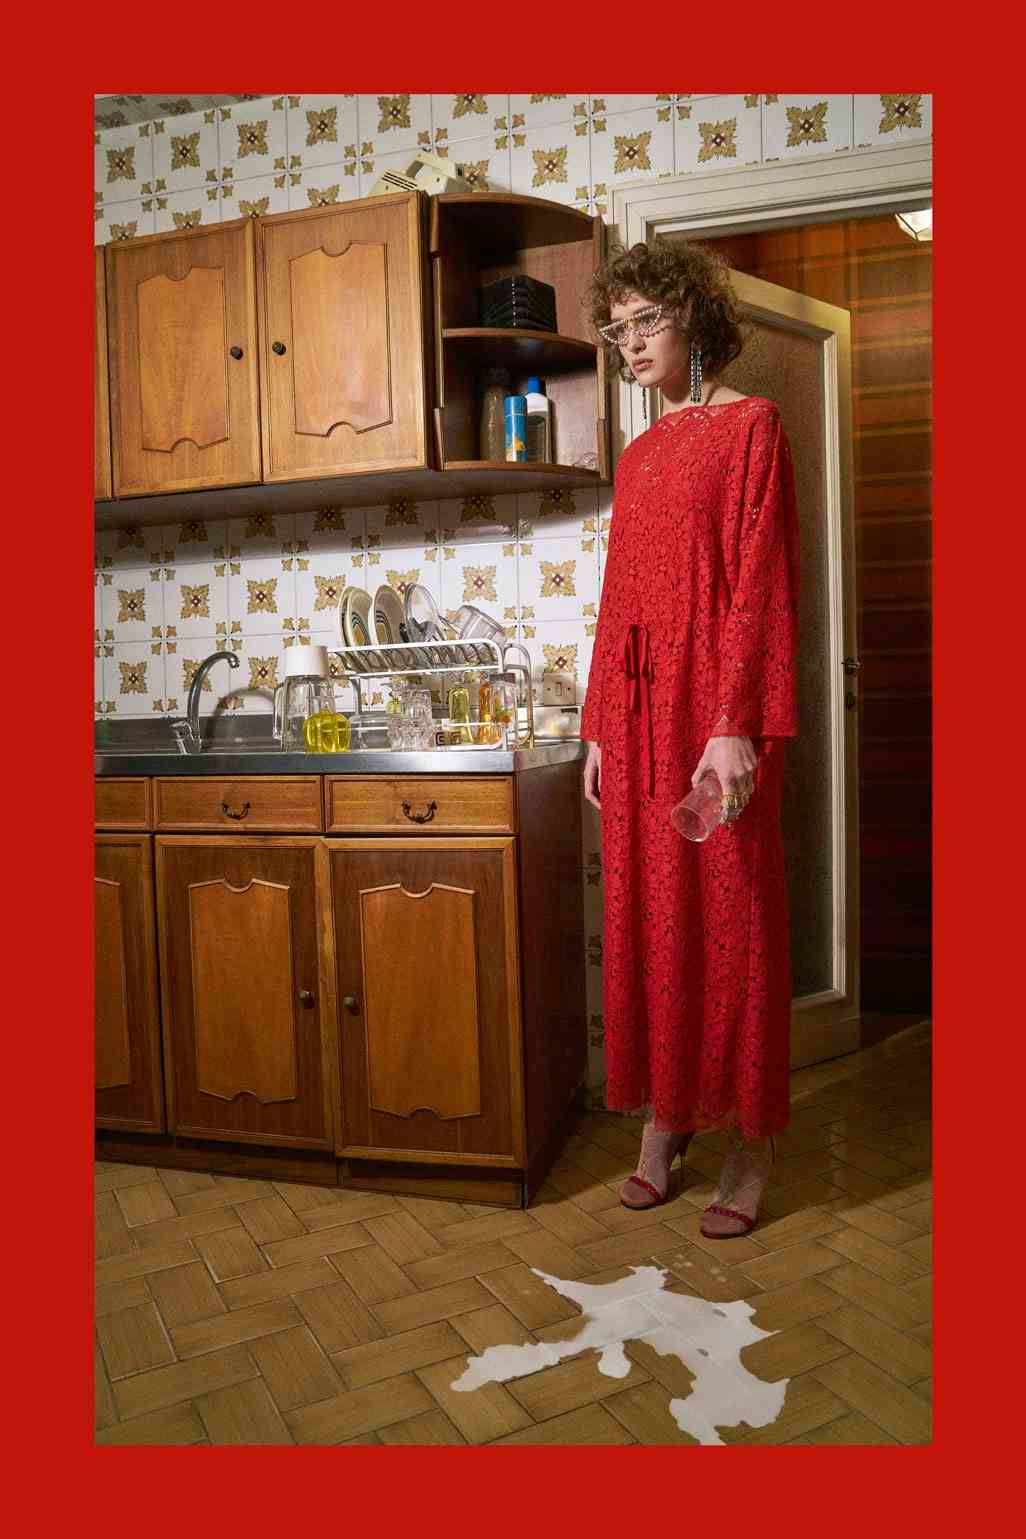 GUCCI - Women's Pre-Fall 2018 Look Book
Photographer: Peter Schlesinger
